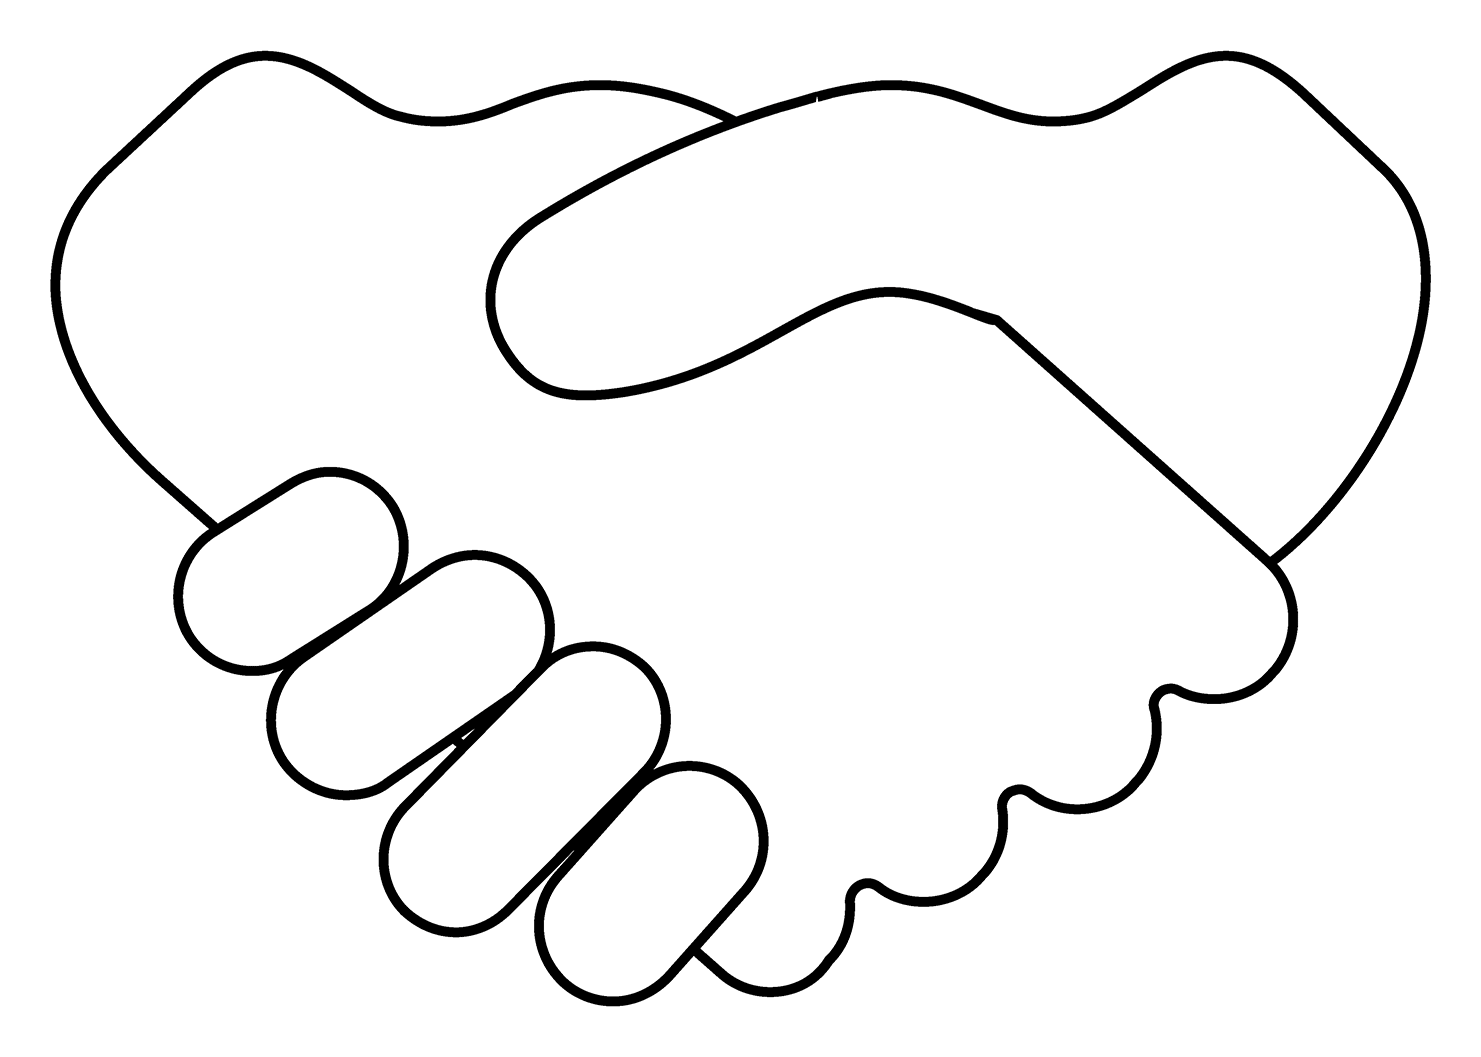 Handshake Emoji coloring page - ColouringPages